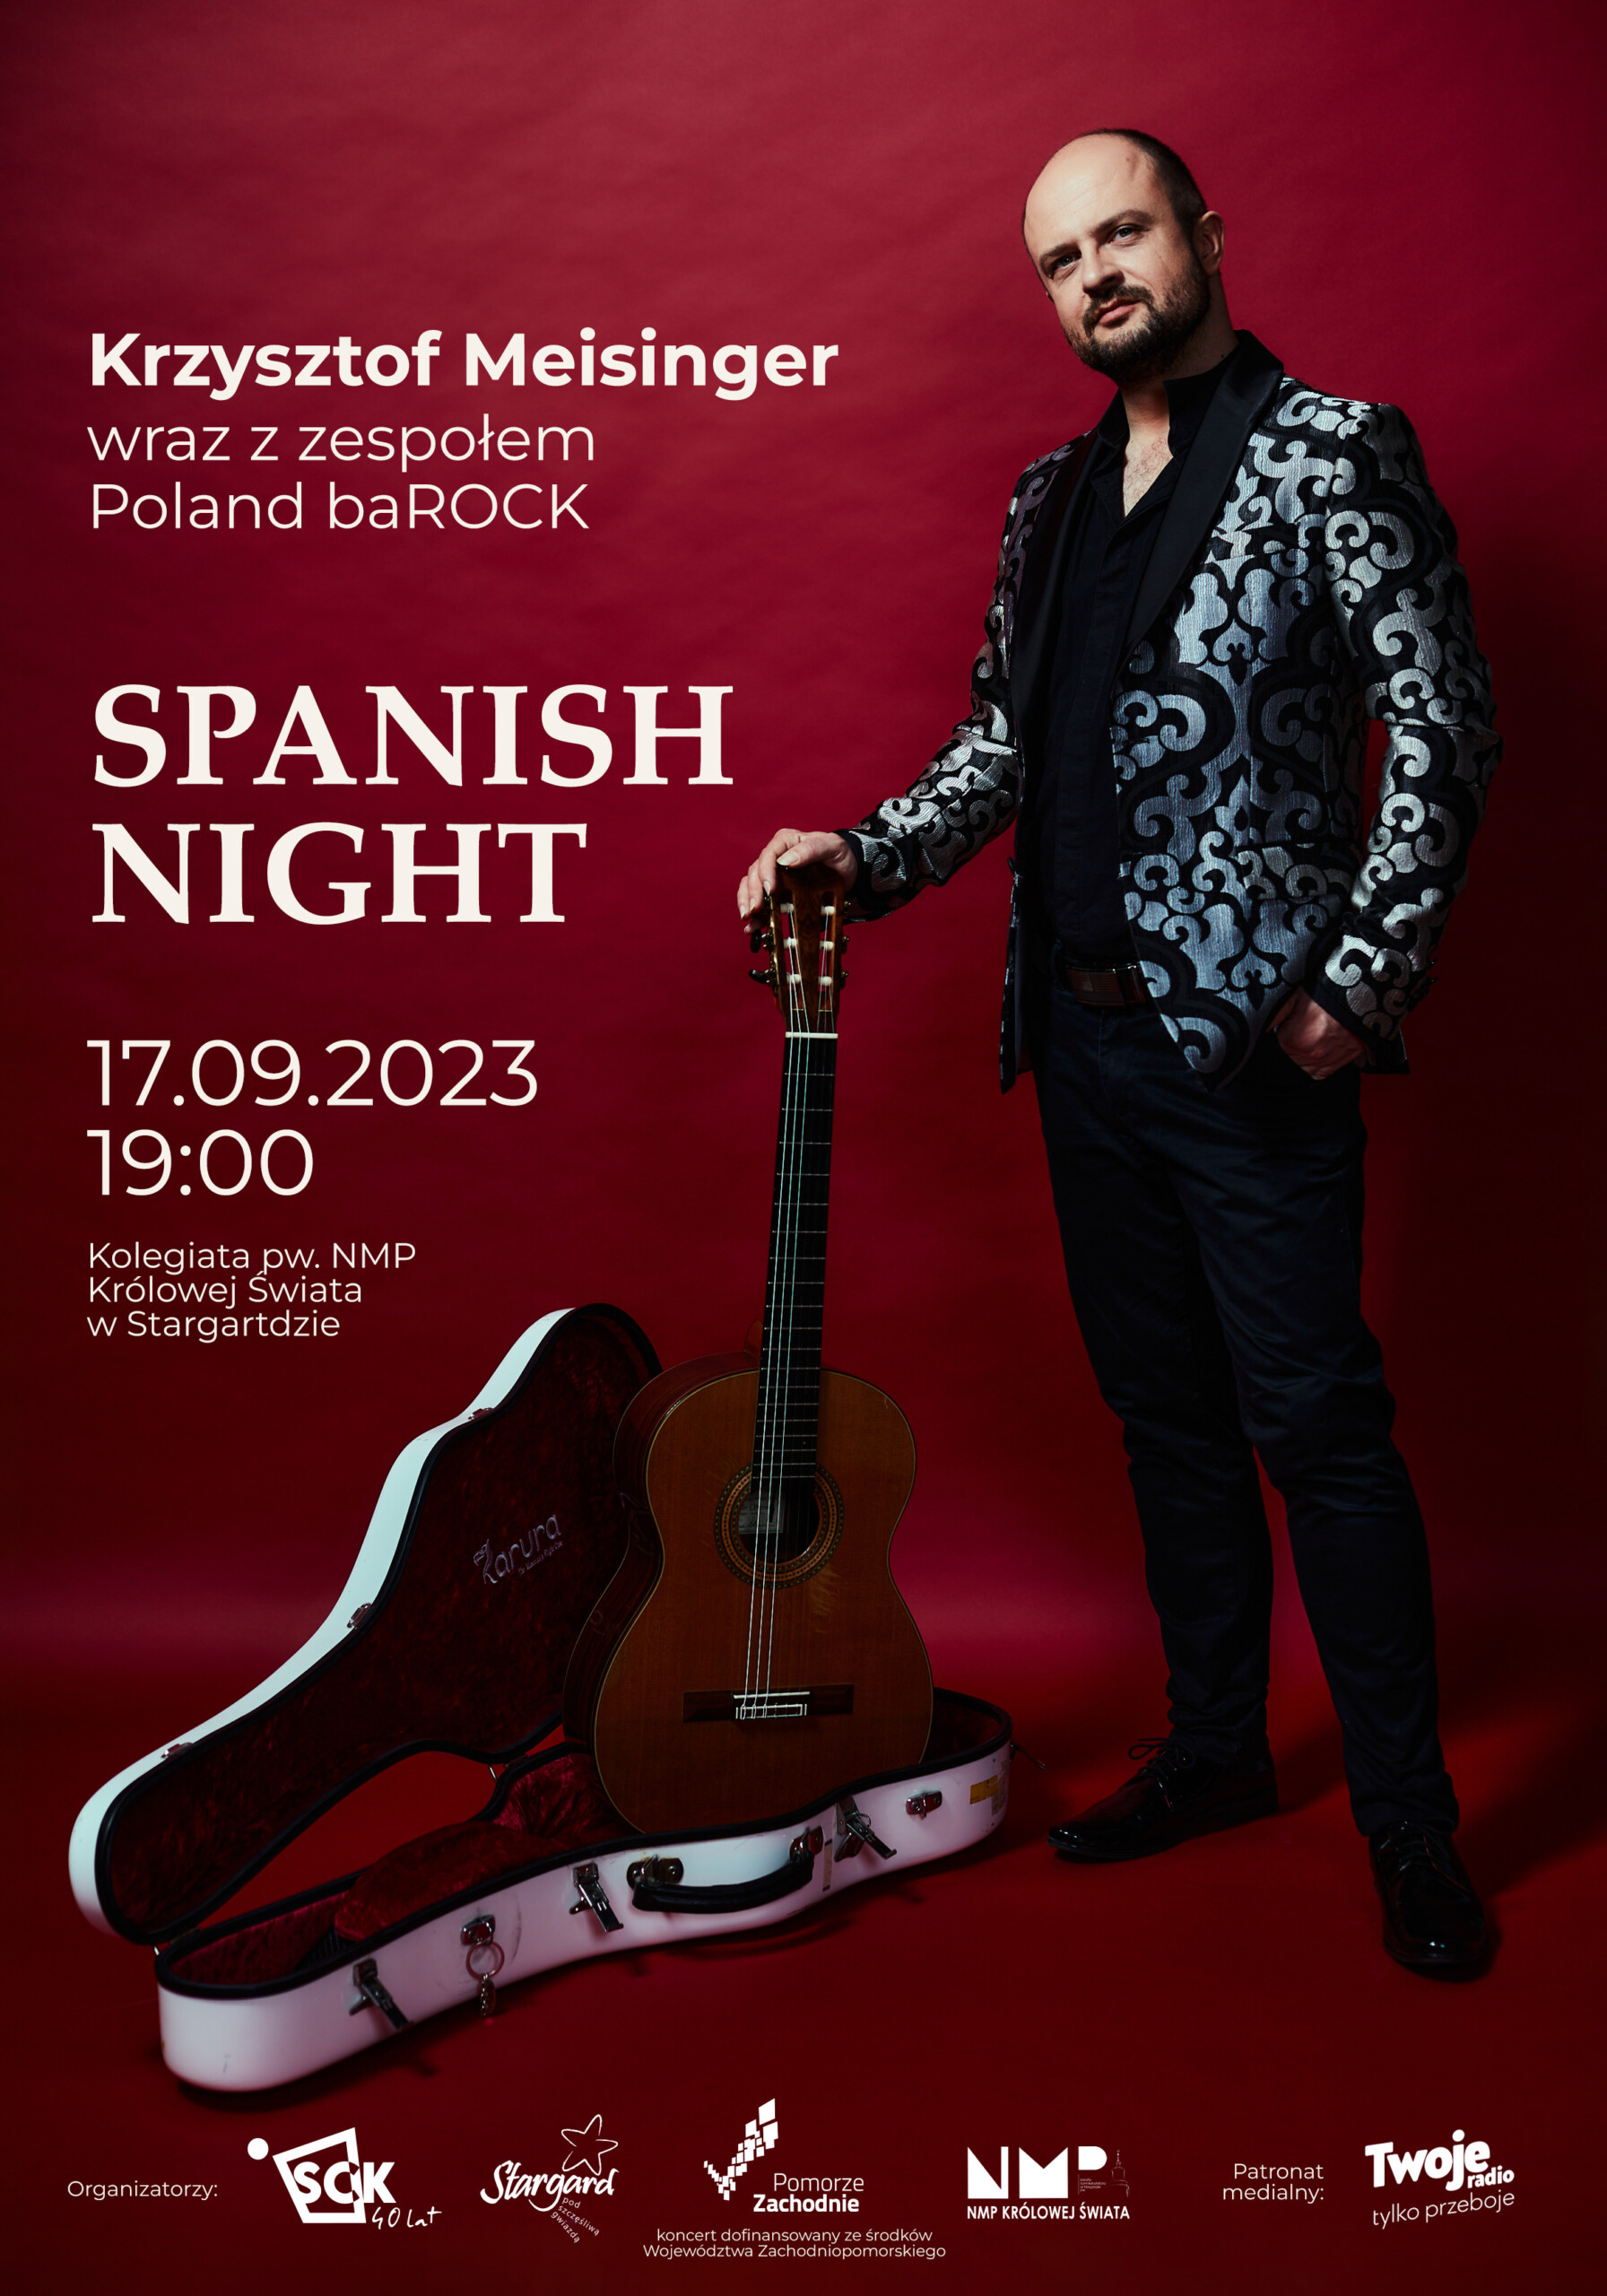 Spanish Night | Krzysztof Meisinger & Poland baROCK